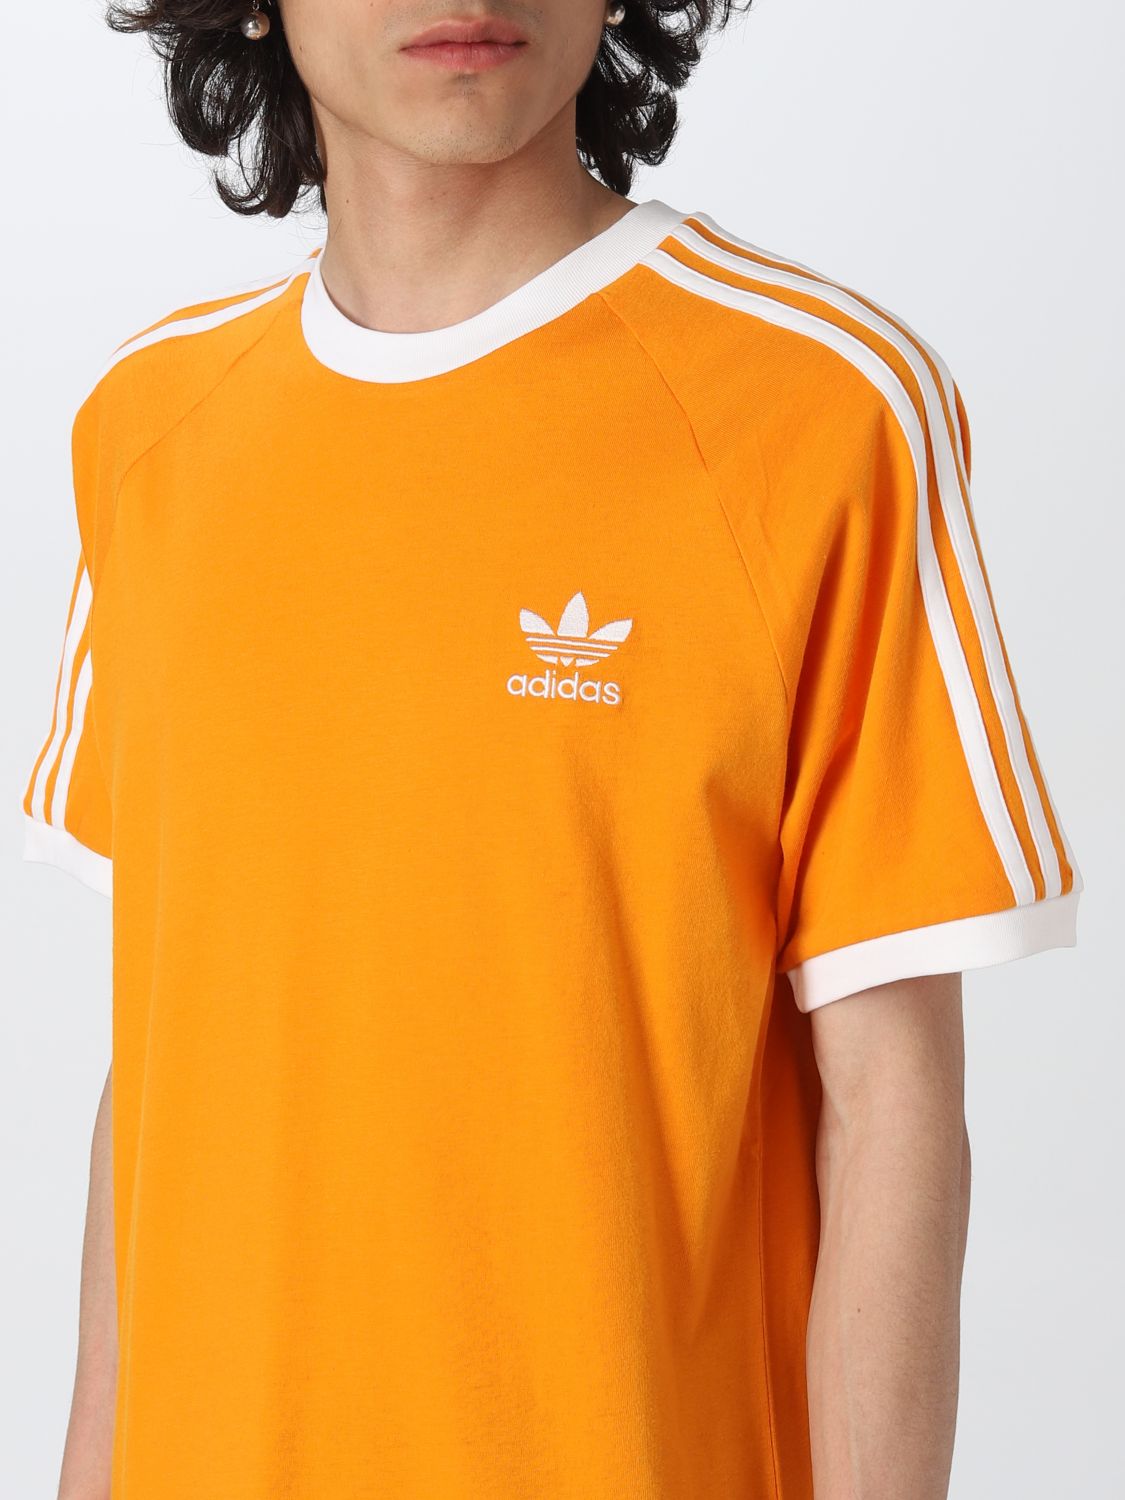 Tee-shirt ADIDAS 3 L Homme Vêtements Adidas Homme Tee-shirts & Polos Adidas Homme Tee-shirts Adidas Homme orange Tee-shirts Adidas Homme 